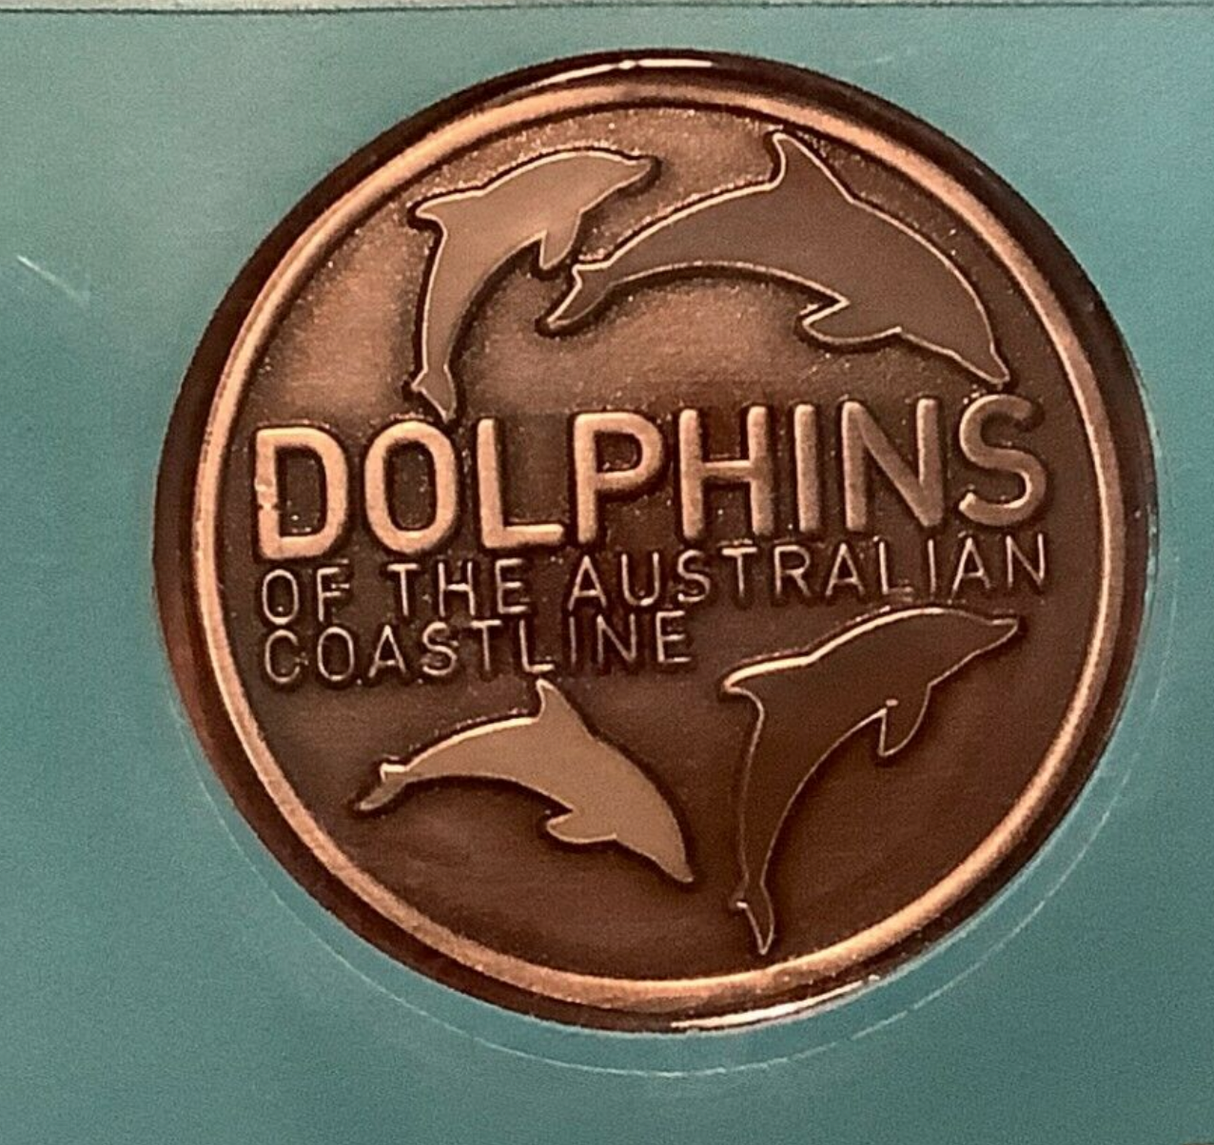 2009 Dolphins of the Australian Coastline Medallion PMC.